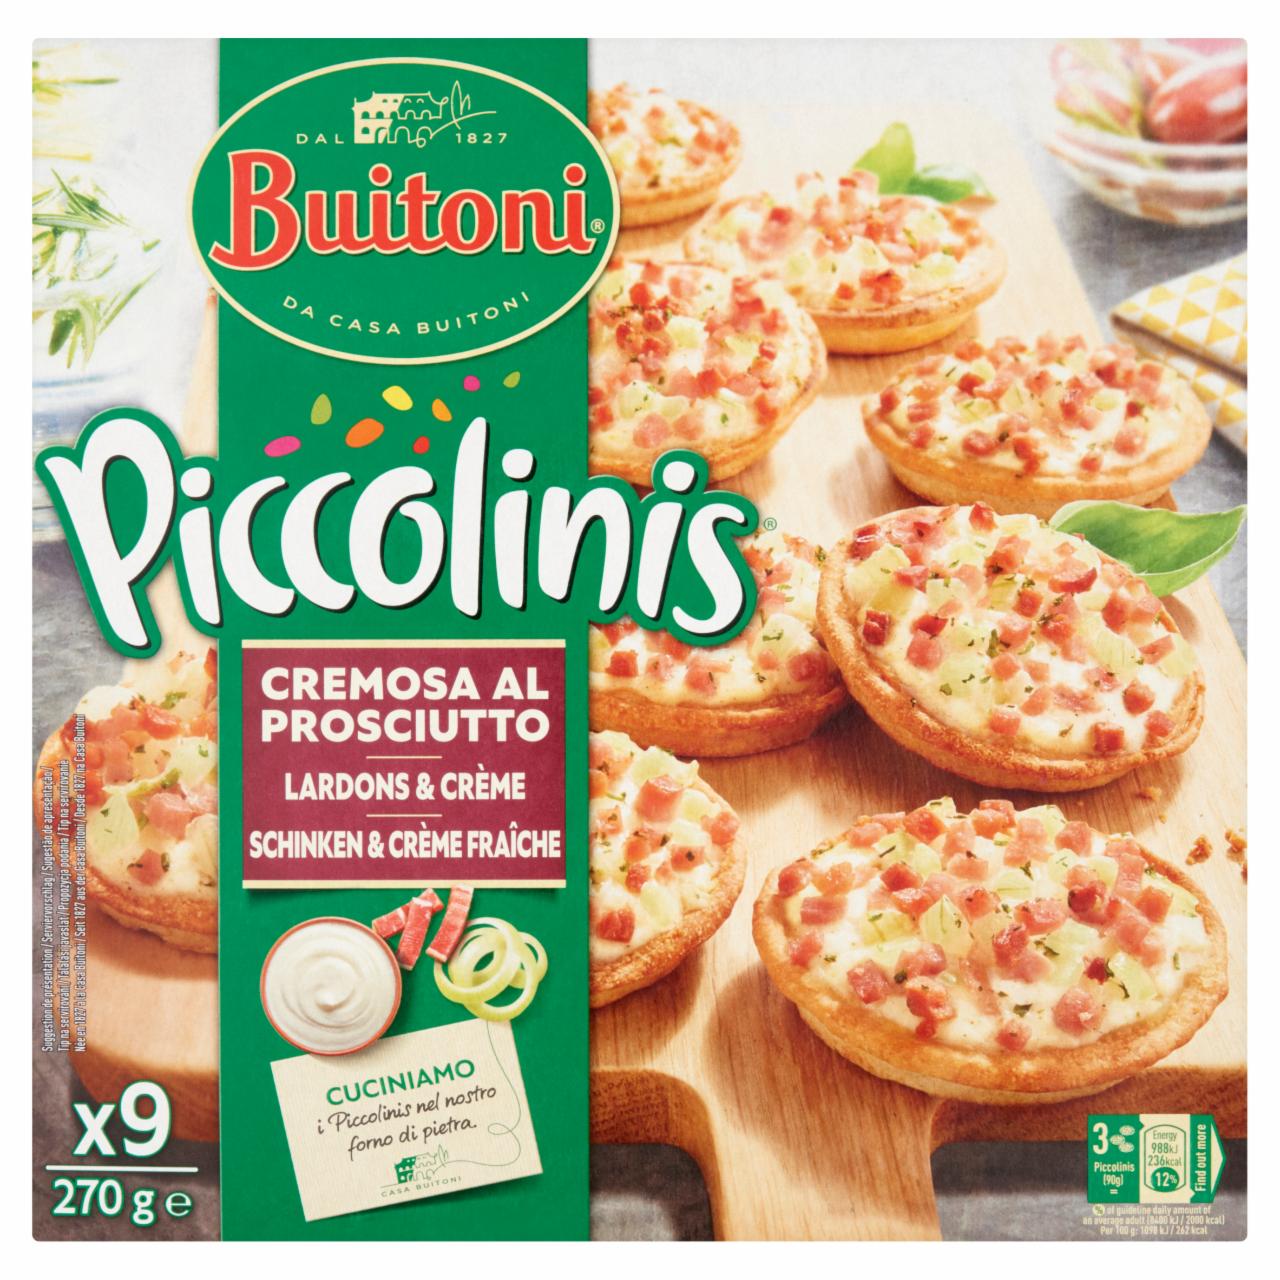 Képek - Buitoni Piccolinis Cremosa al Prosciutto gyorsfagyasztott mini pizza 9 db 270 g